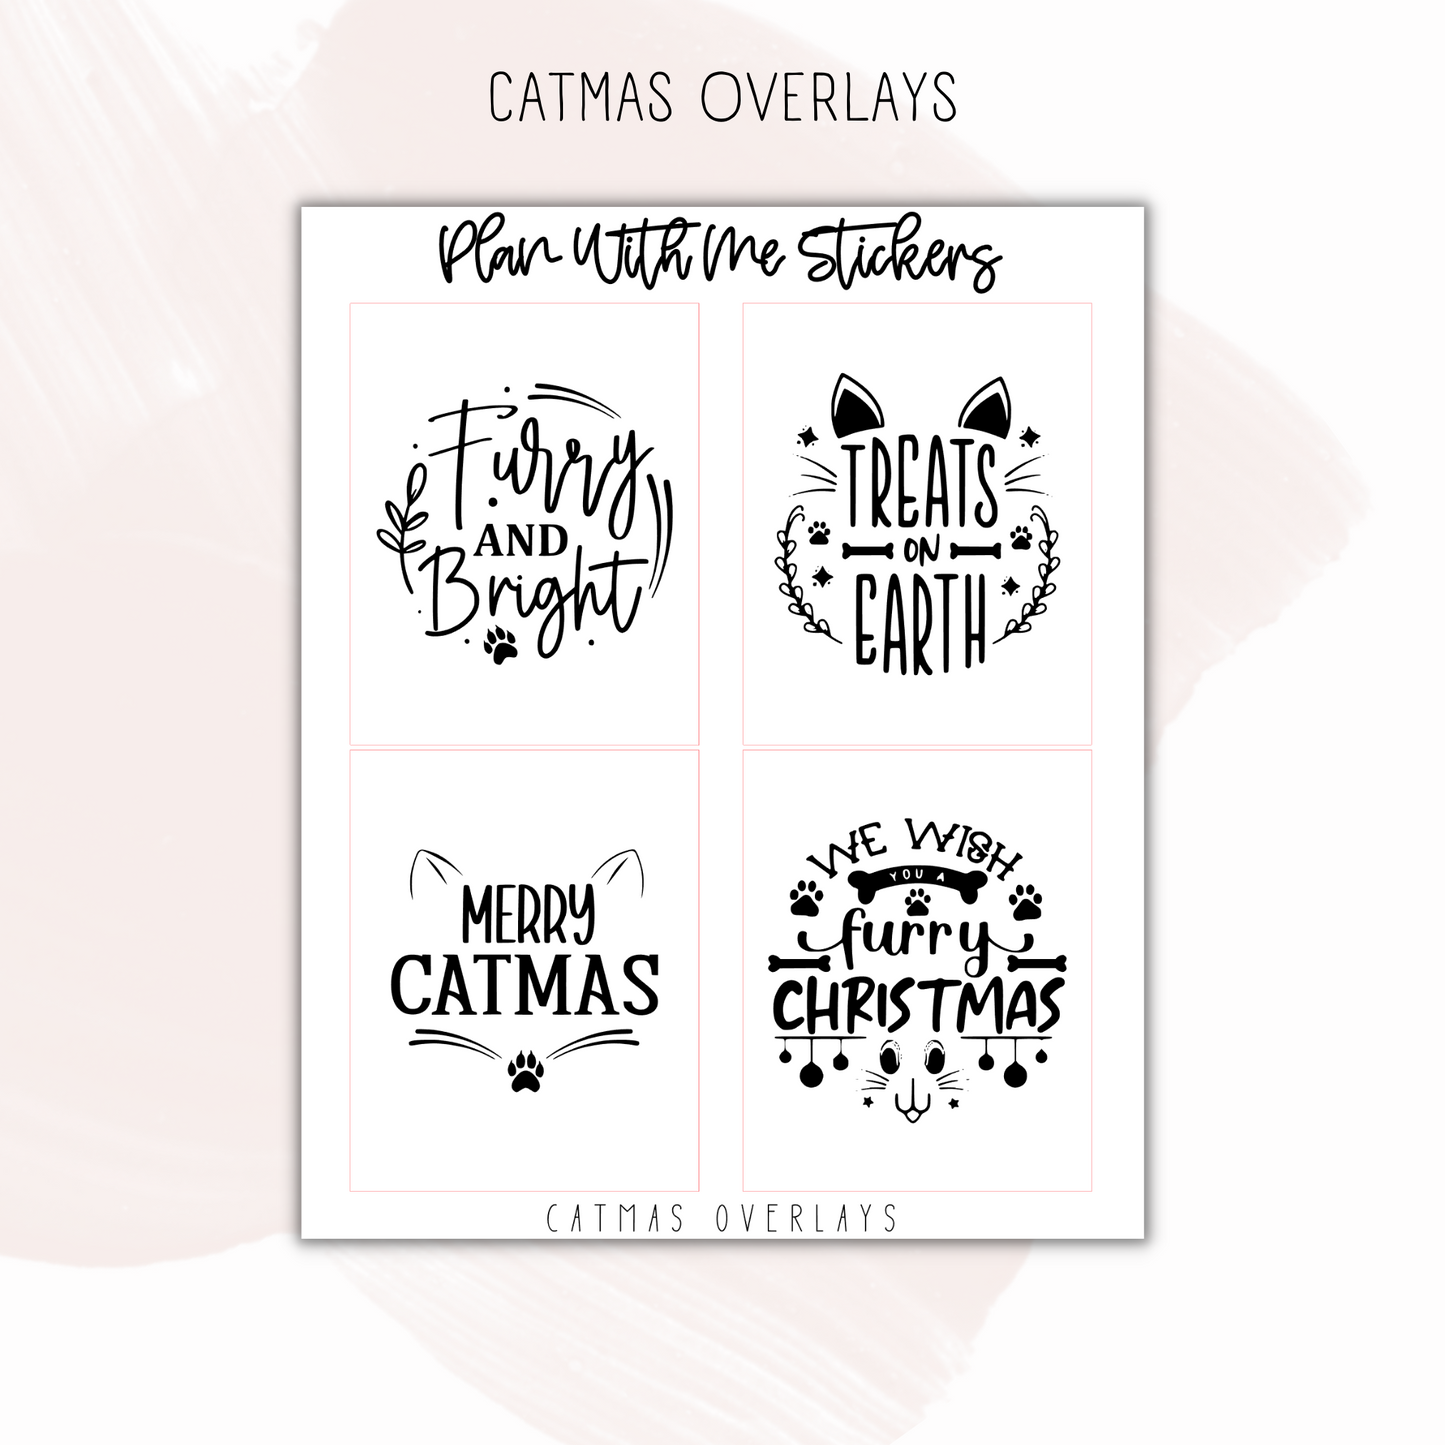 Catmas Overlays